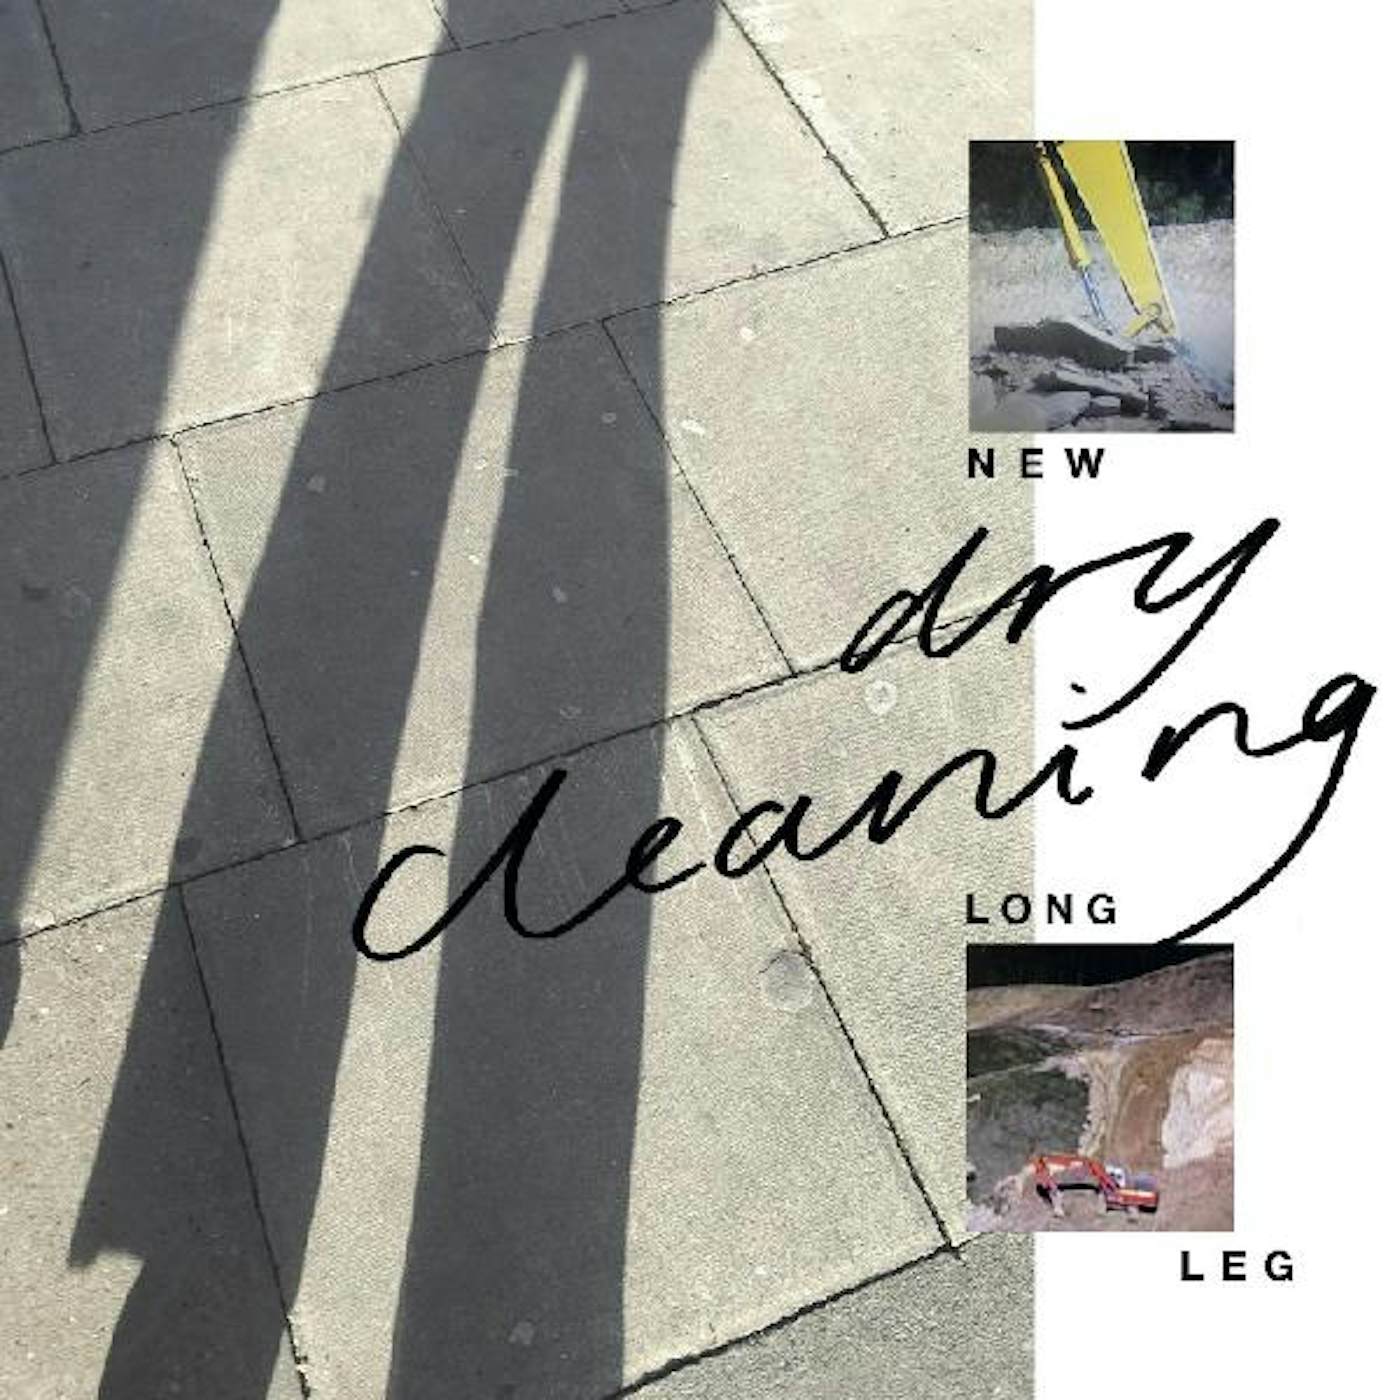 Dry Cleaning New Long Leg Vinyl Record